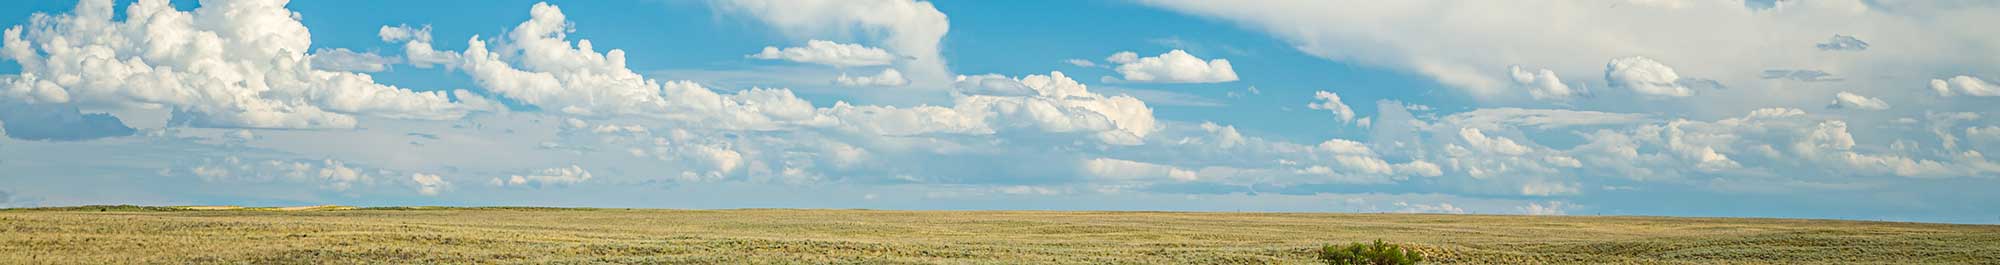 Midwestern prairie under a blue sky